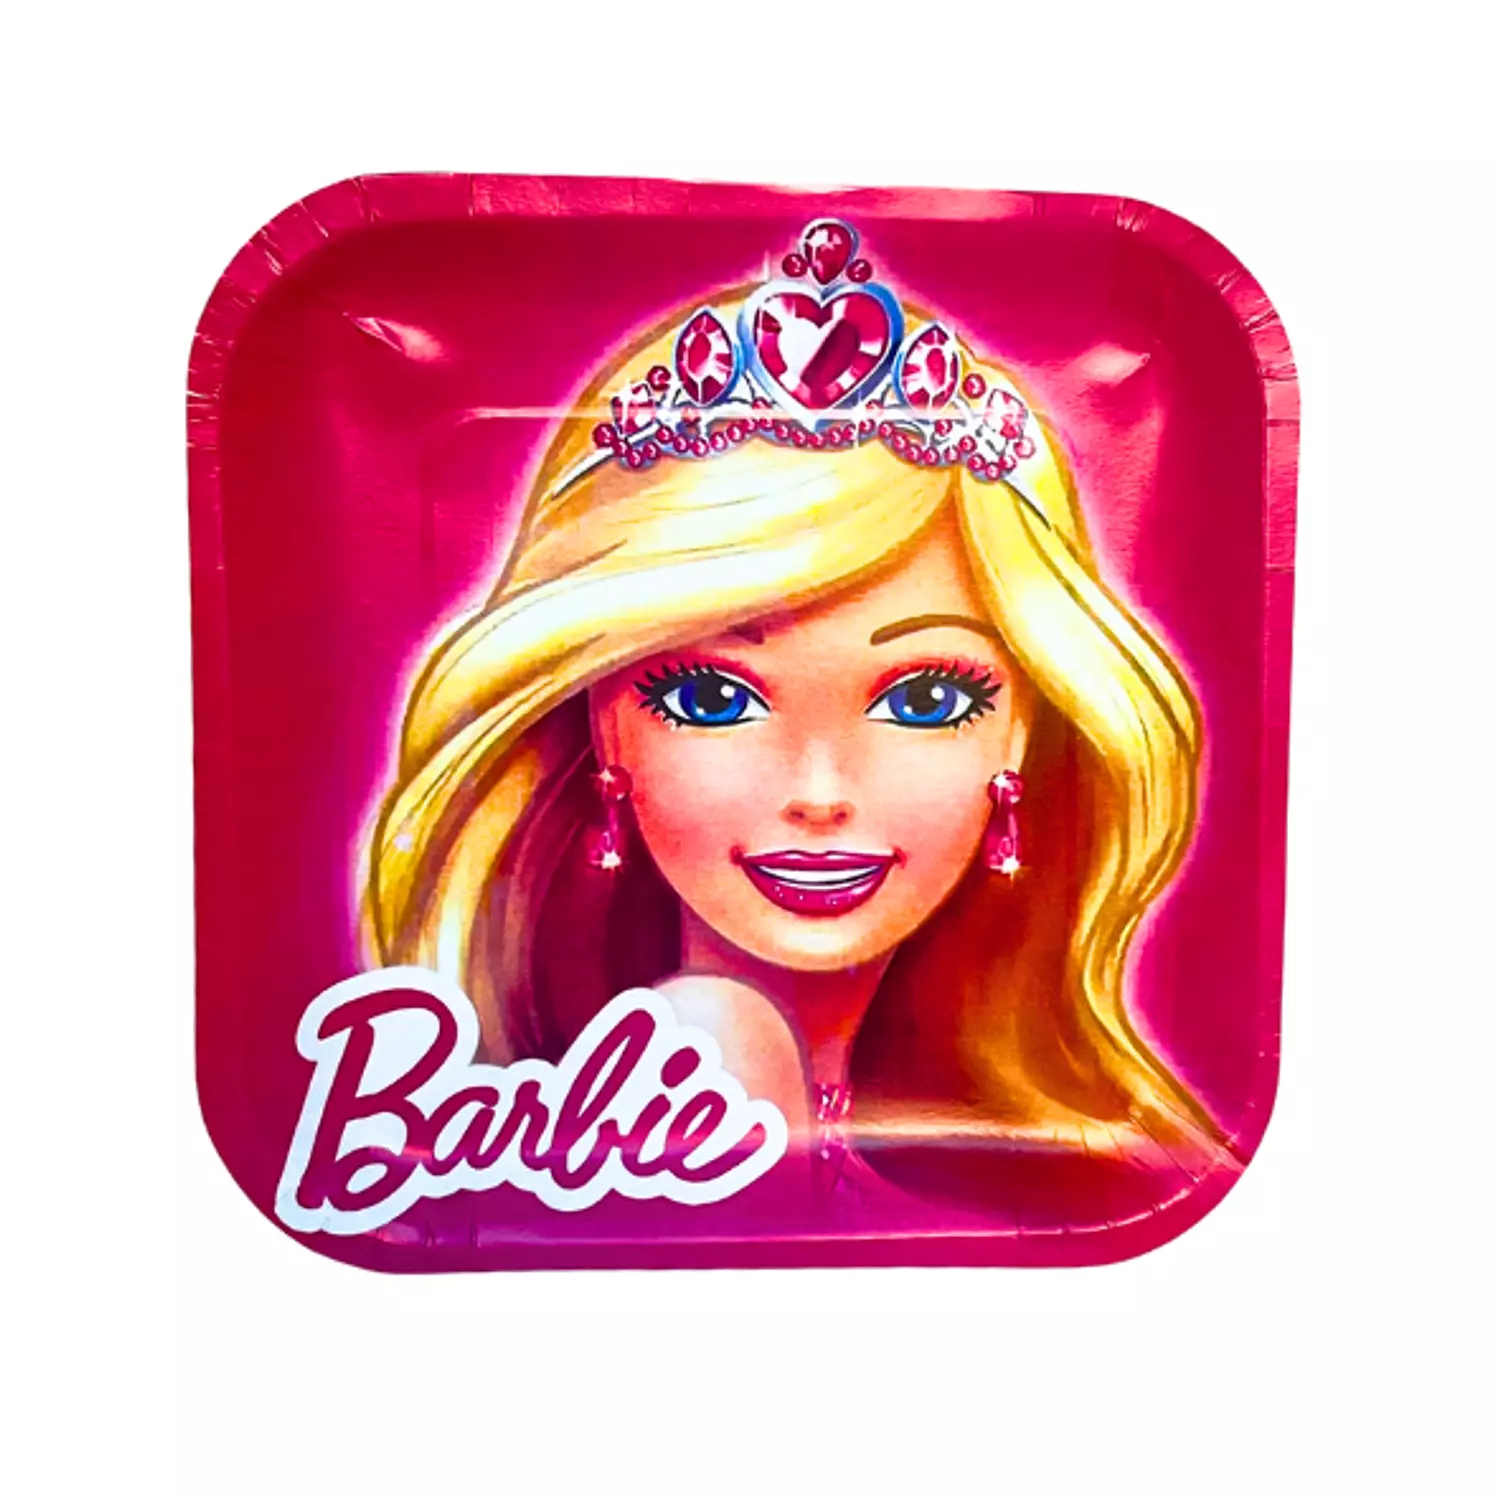 Barbie Square Paper Plates hover image